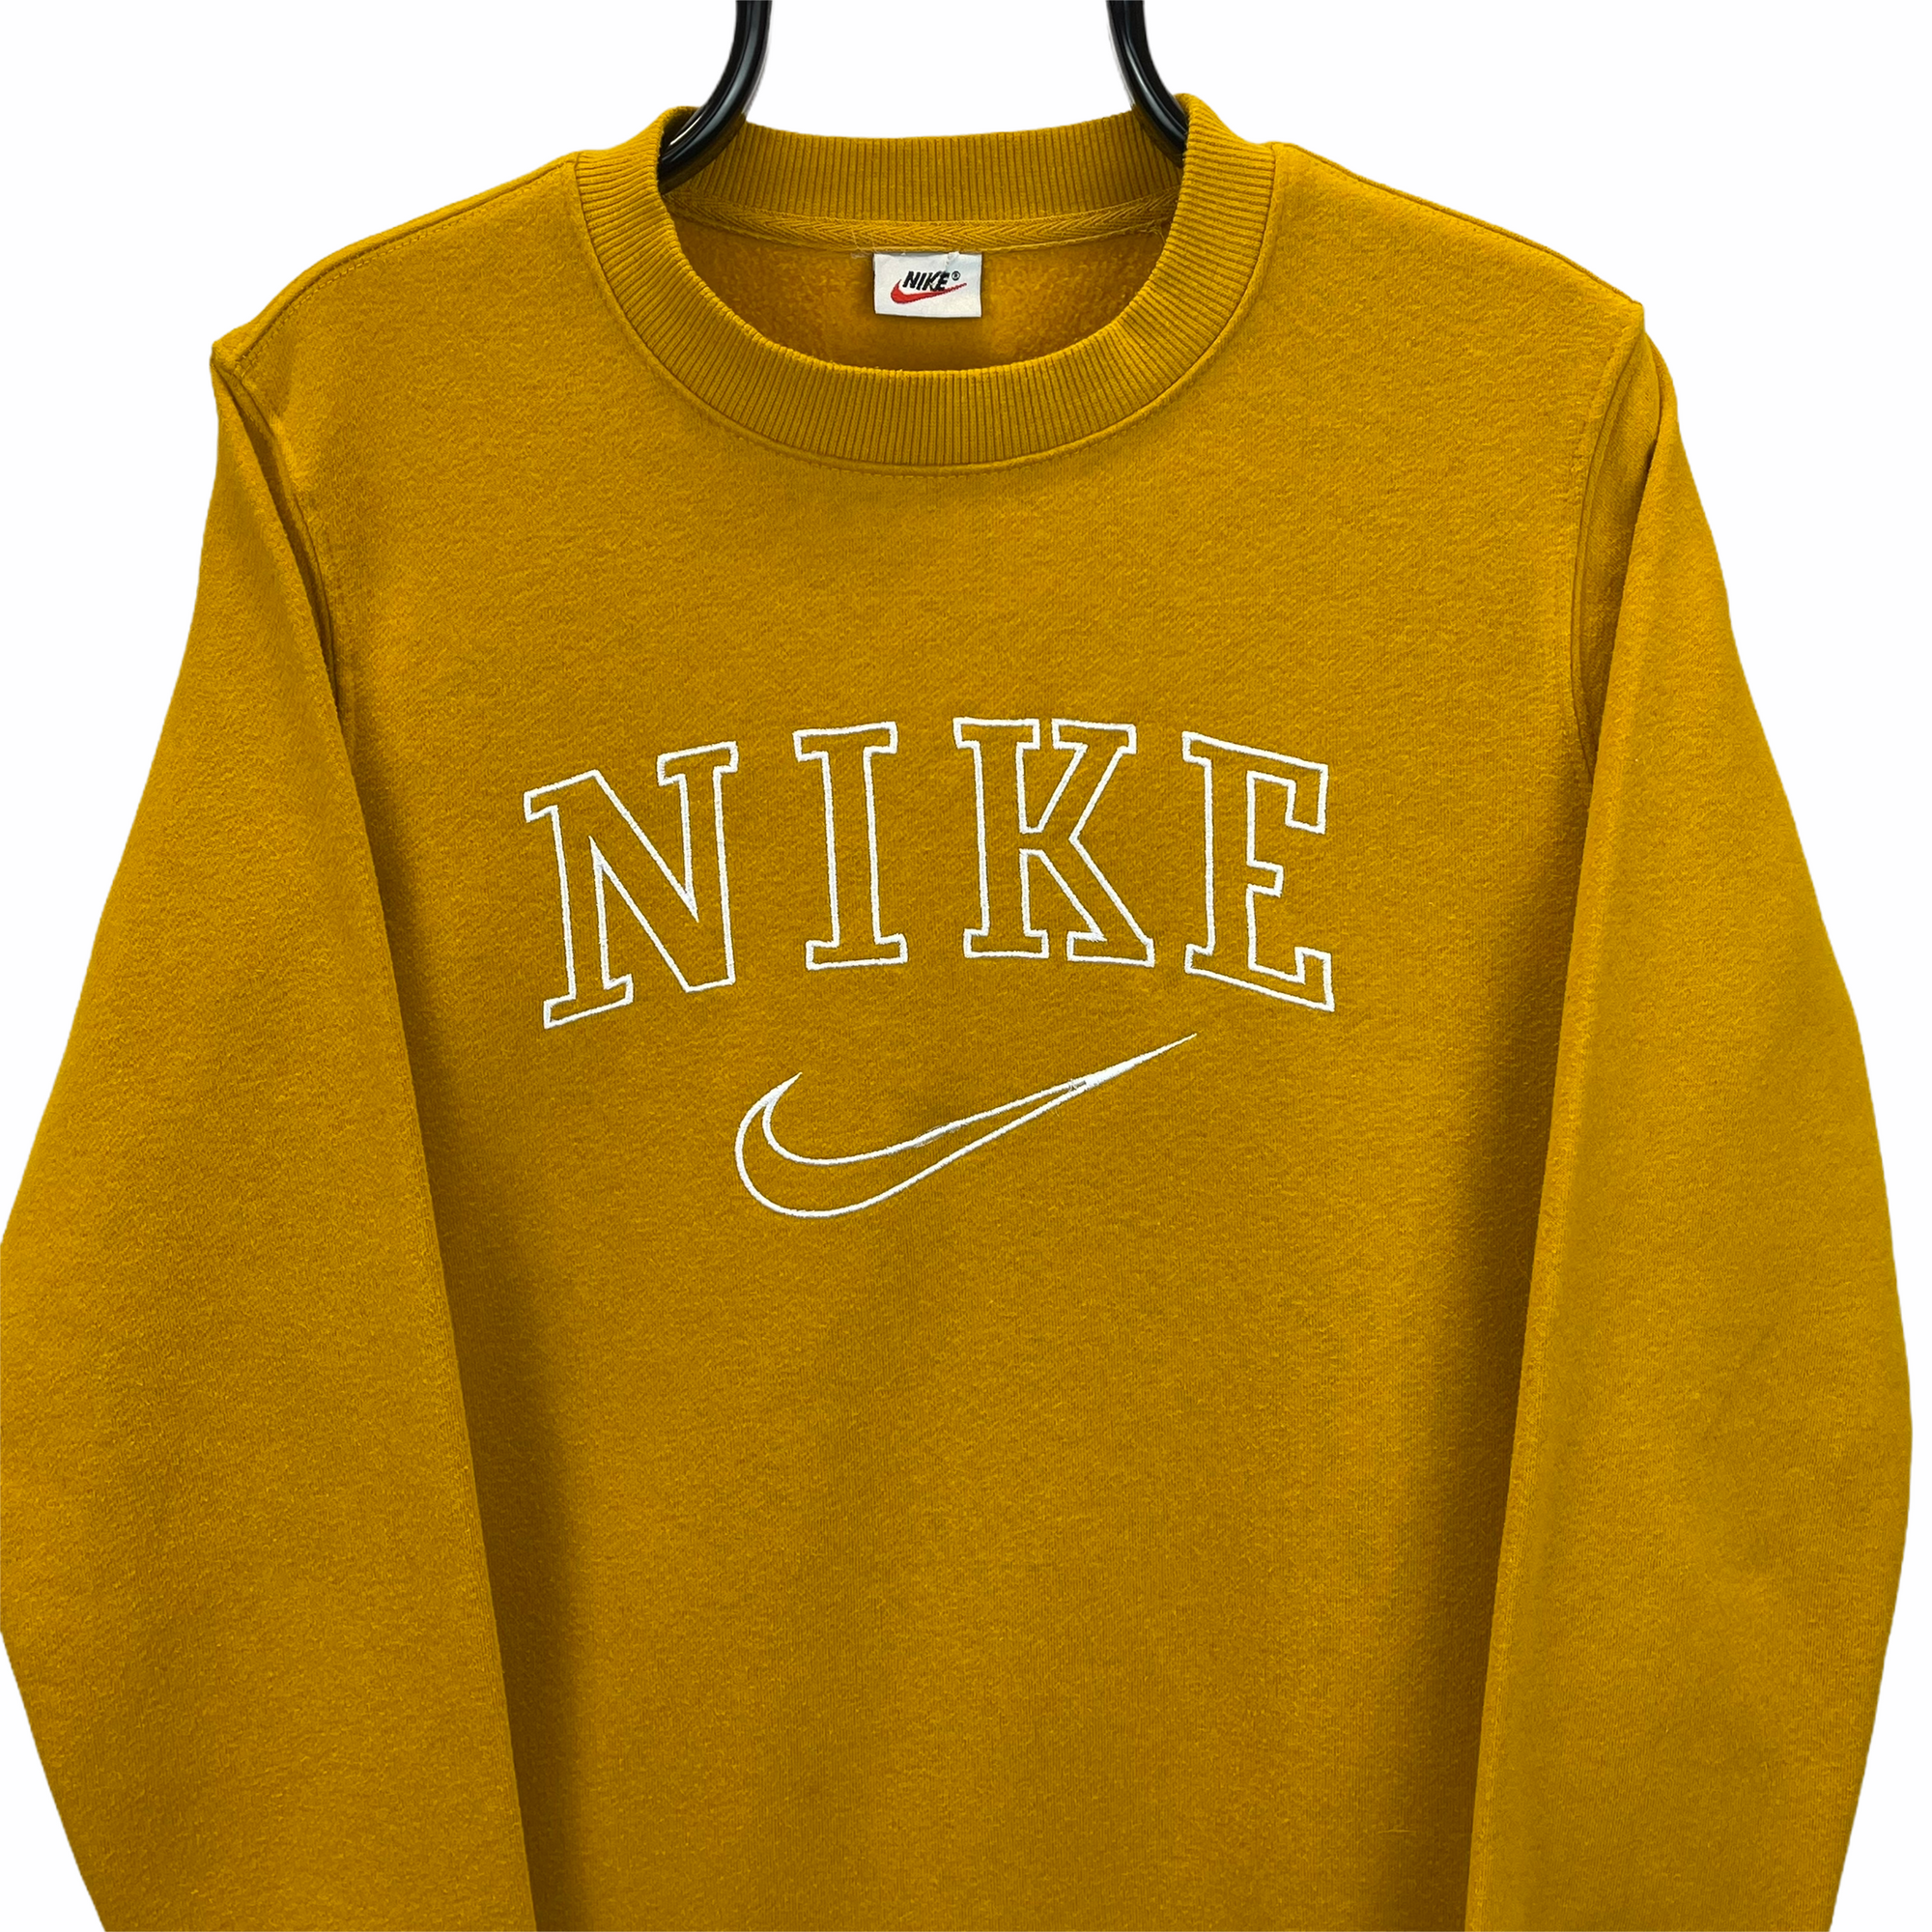 Vintage 90s Nike Spellout Sweatshirt in Mustard - Men's Small/Women's Medium